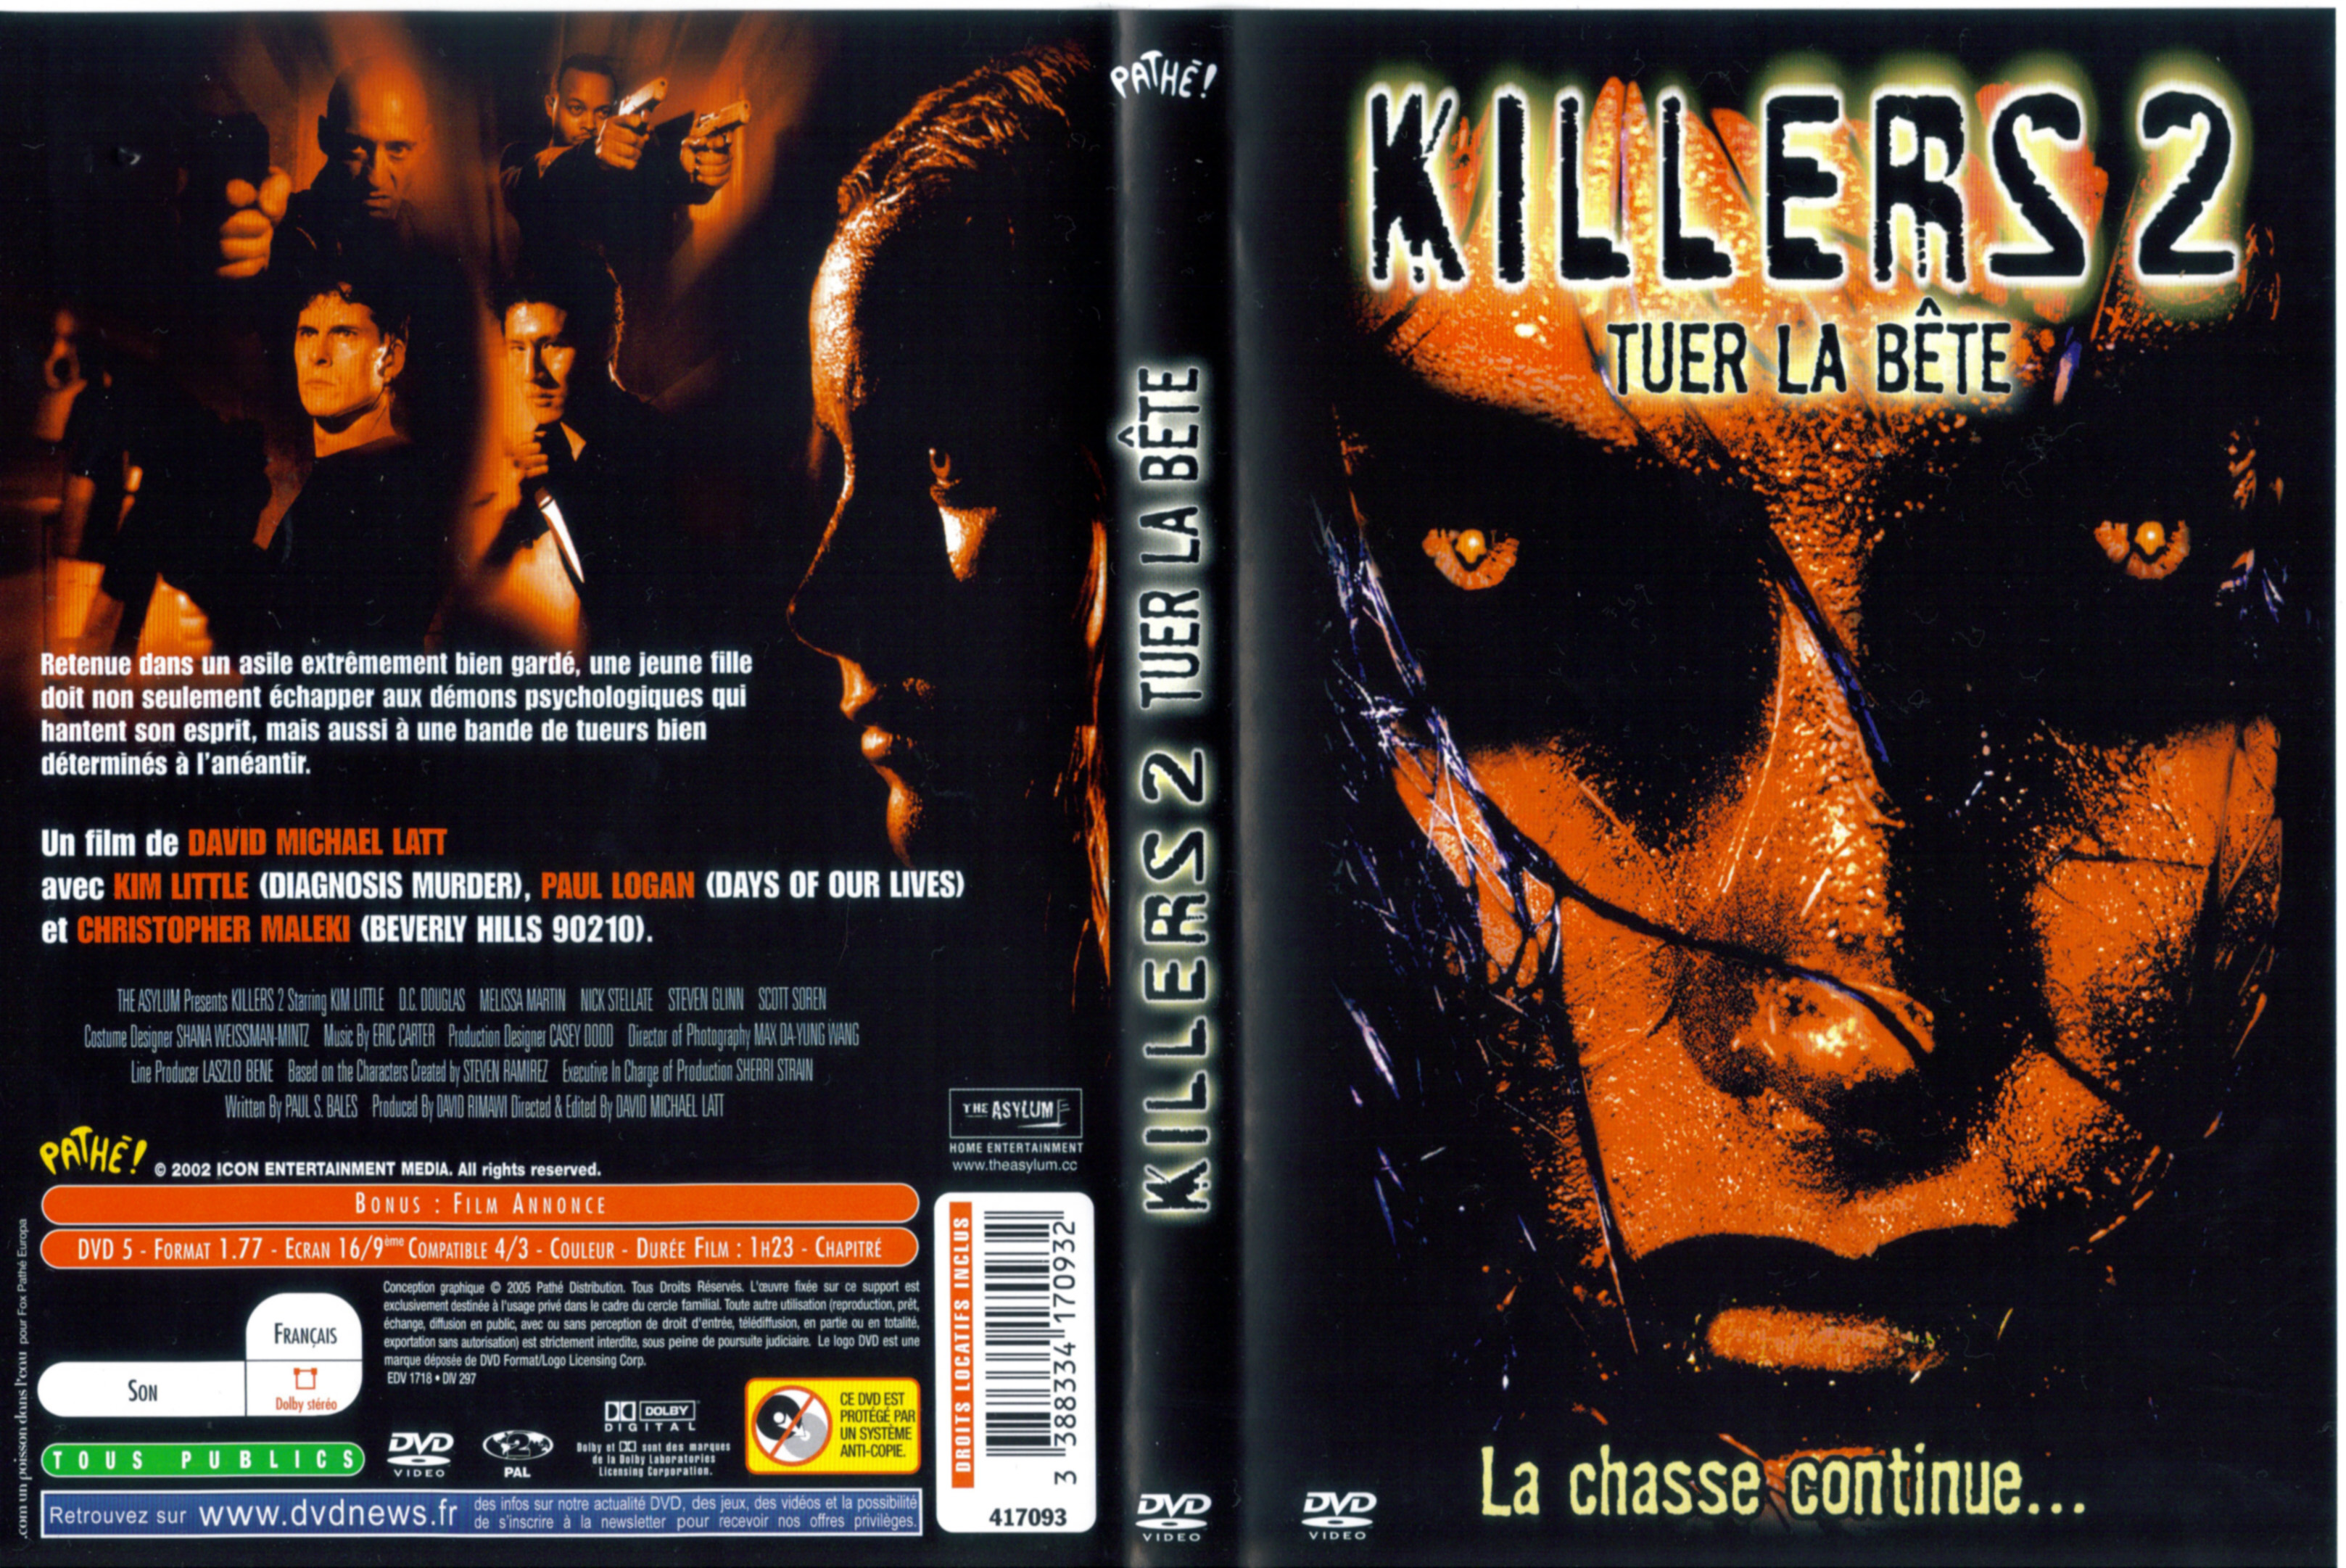 Jaquette DVD Killers 2